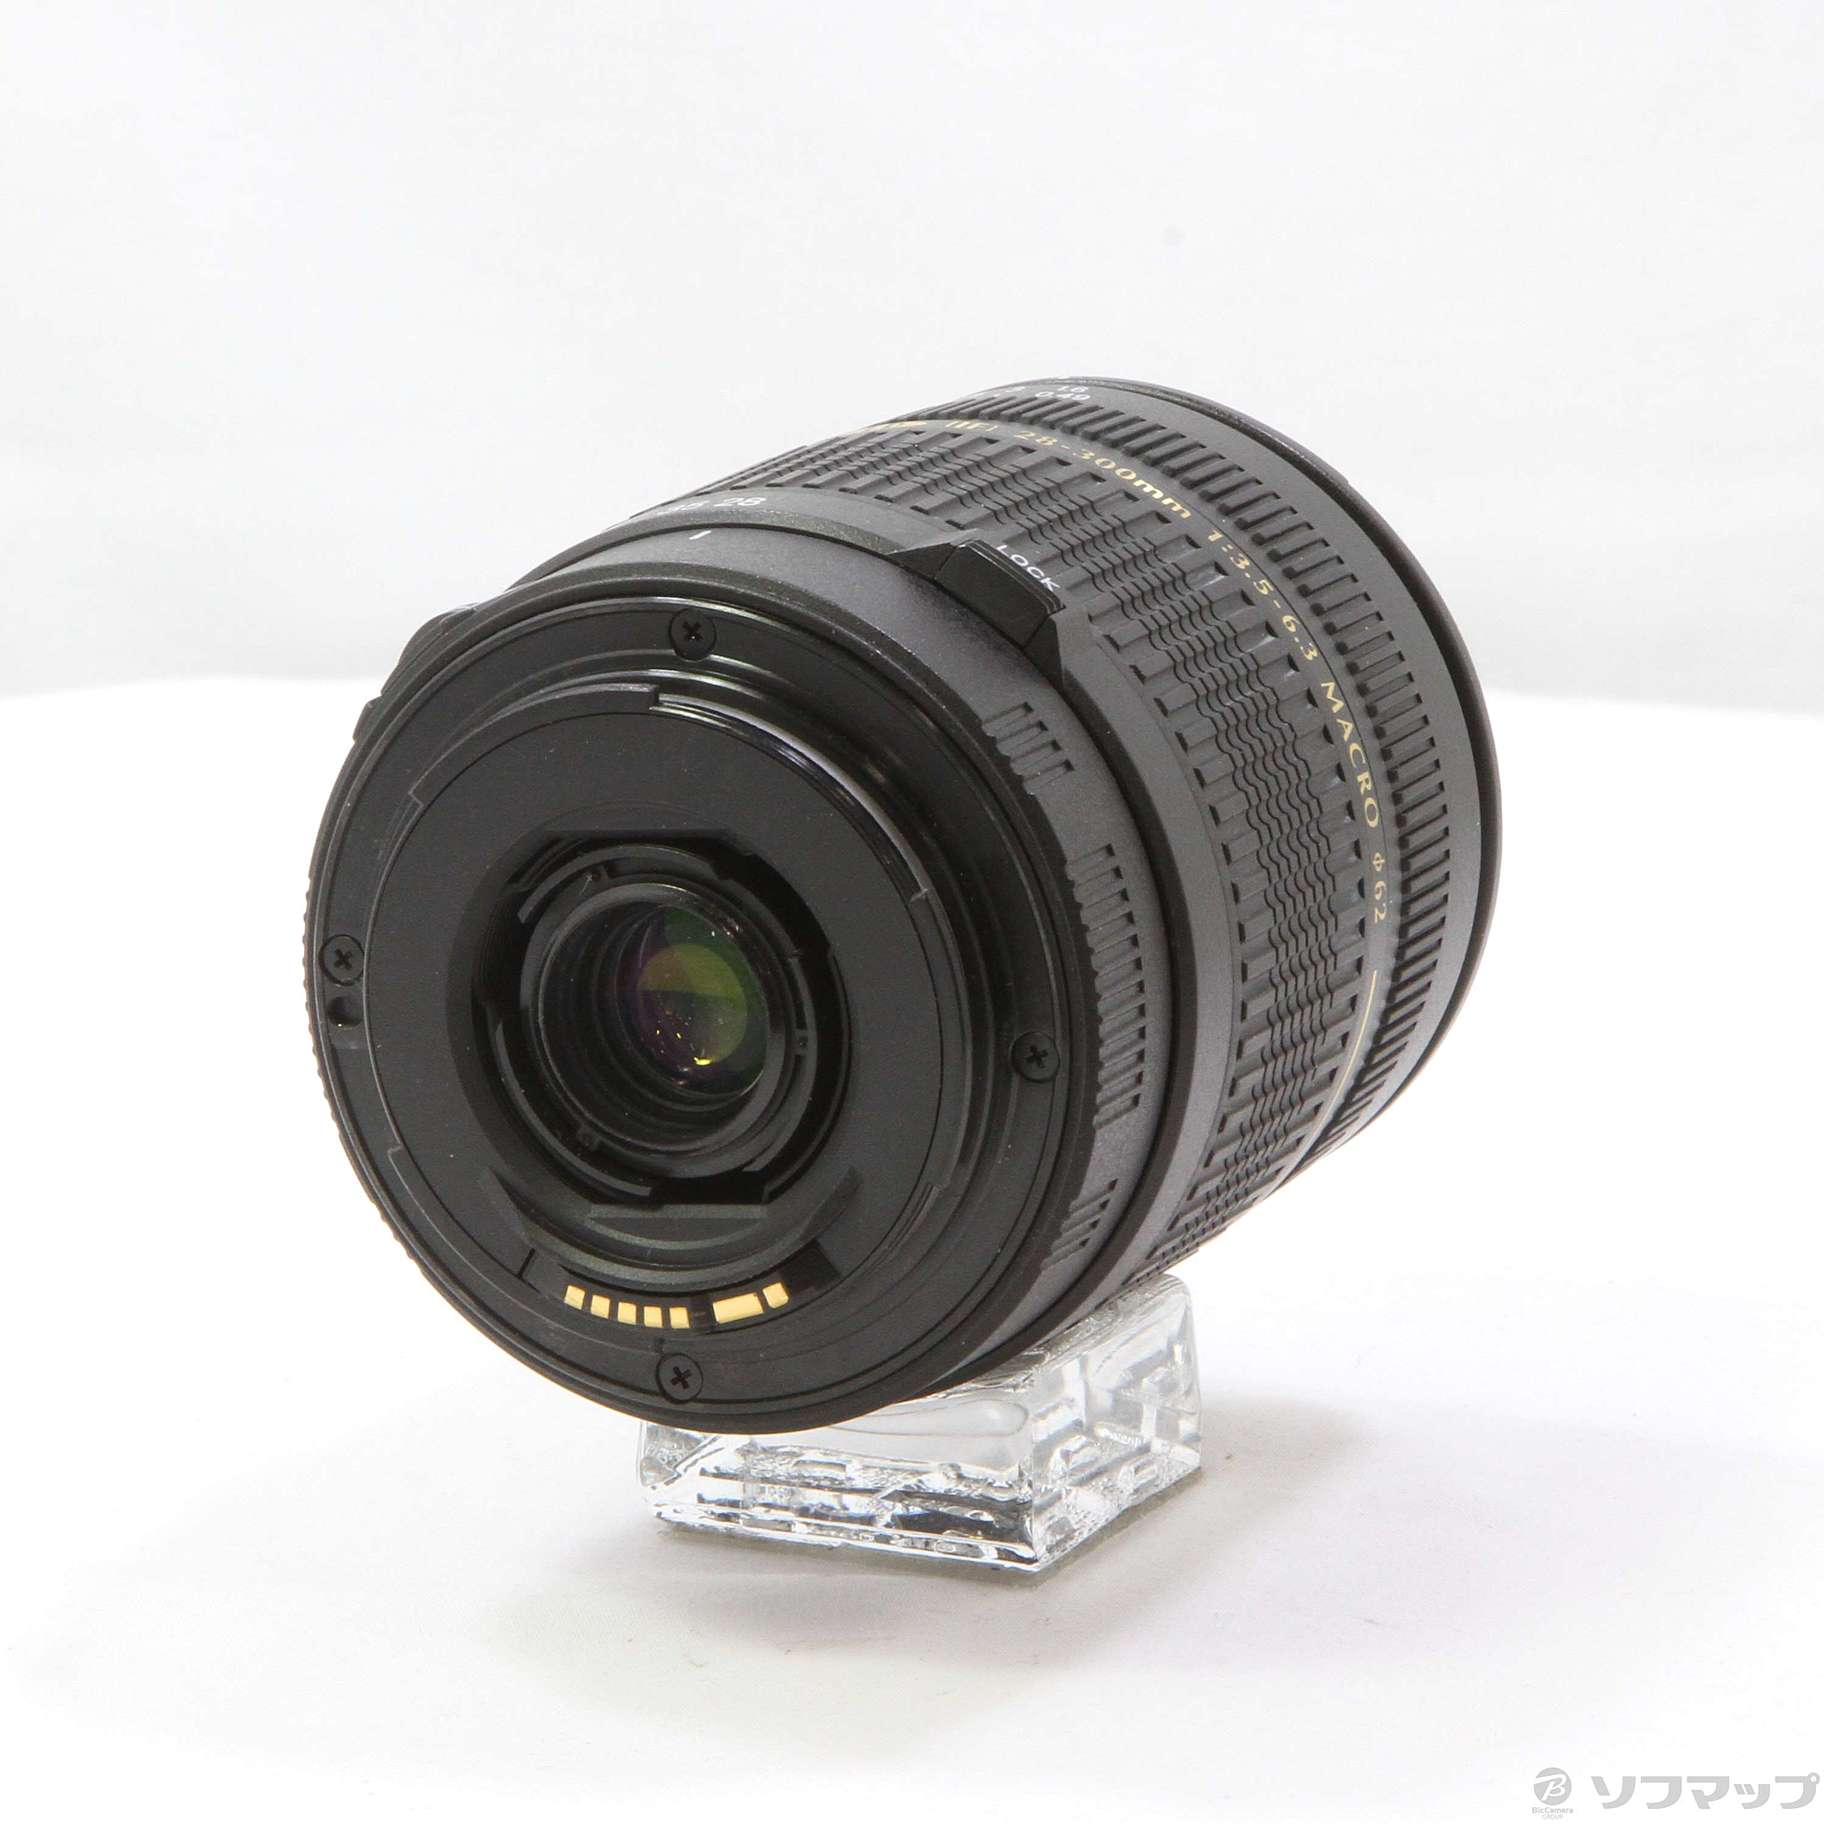 中古】TAMRON AF 28-300mm F3.5-6.3 XR Di A061E Canon用